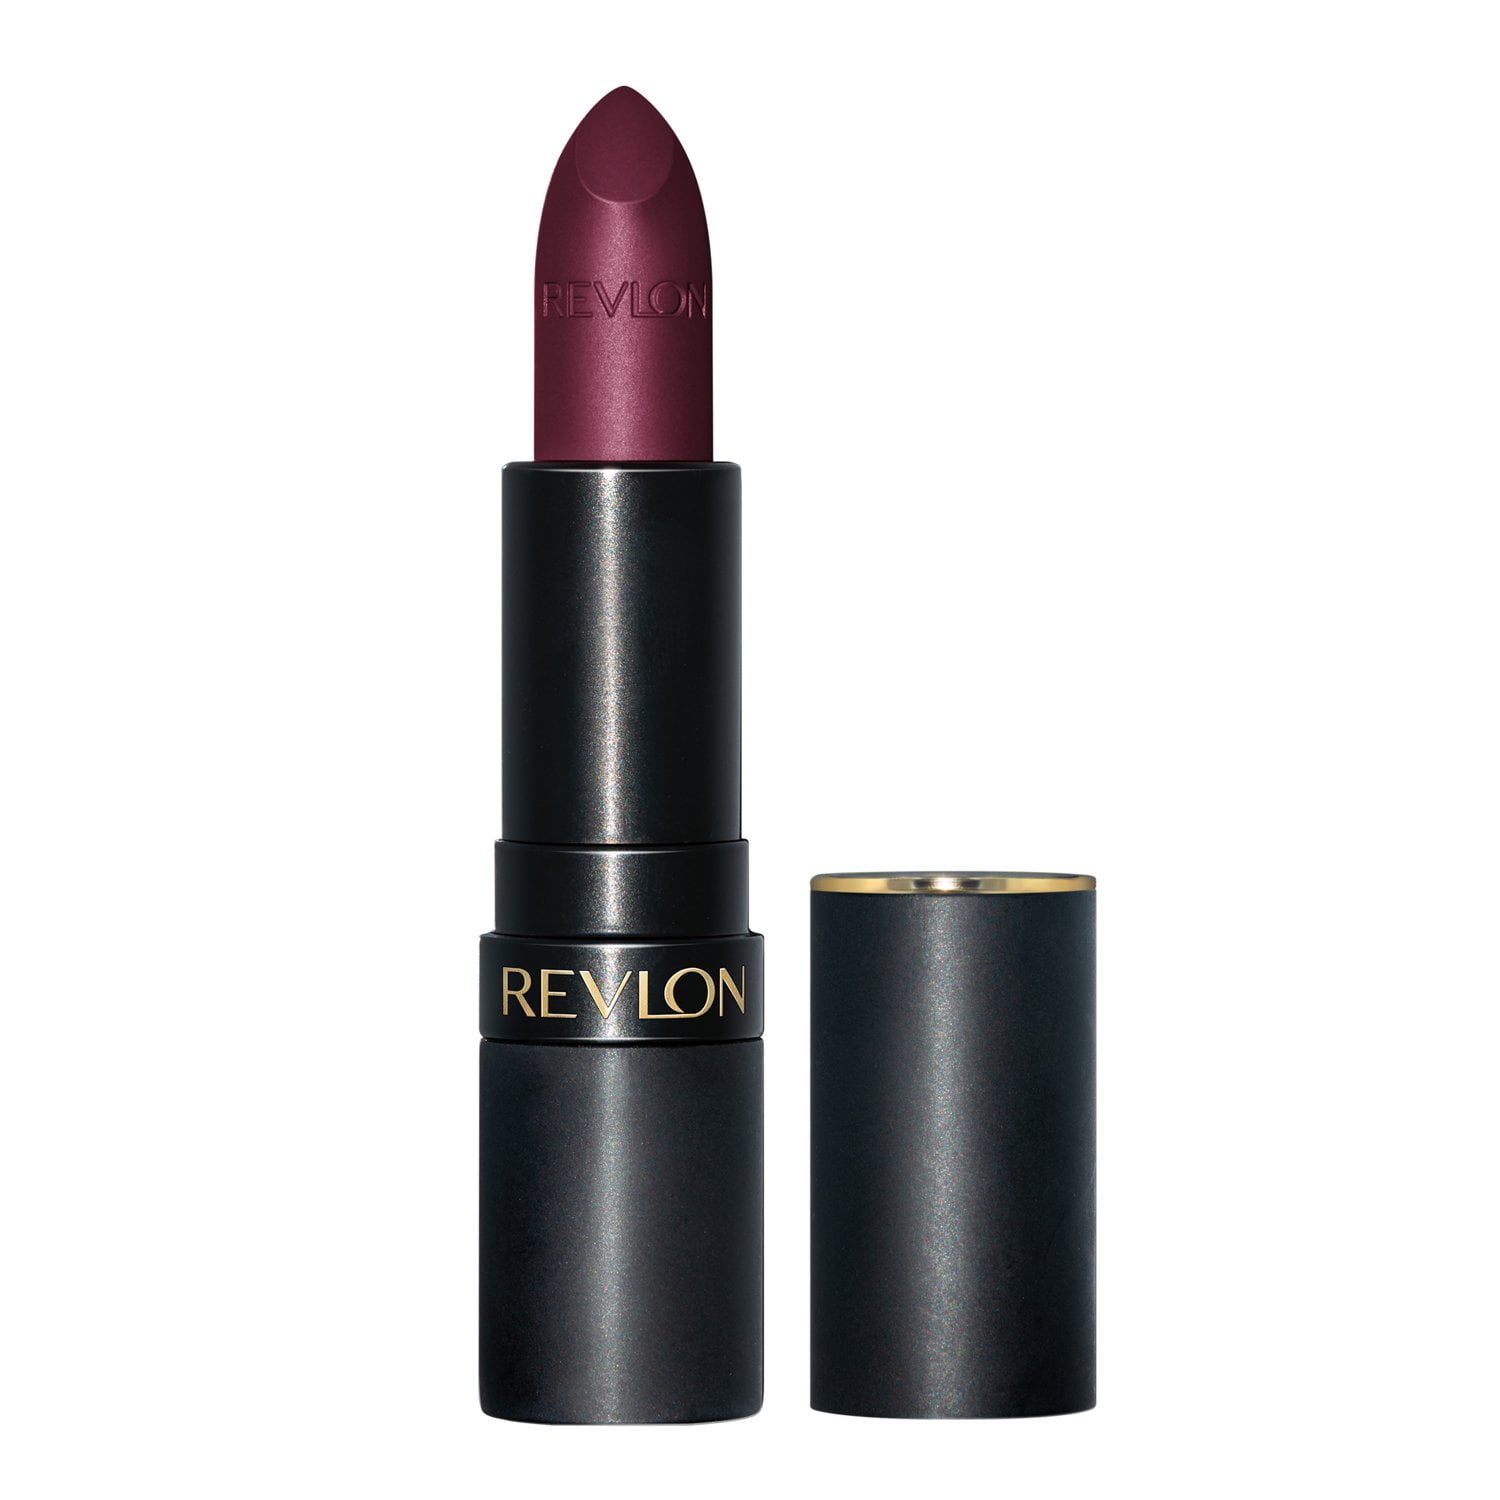 revlon super lustrous lipstick black cherry swatches